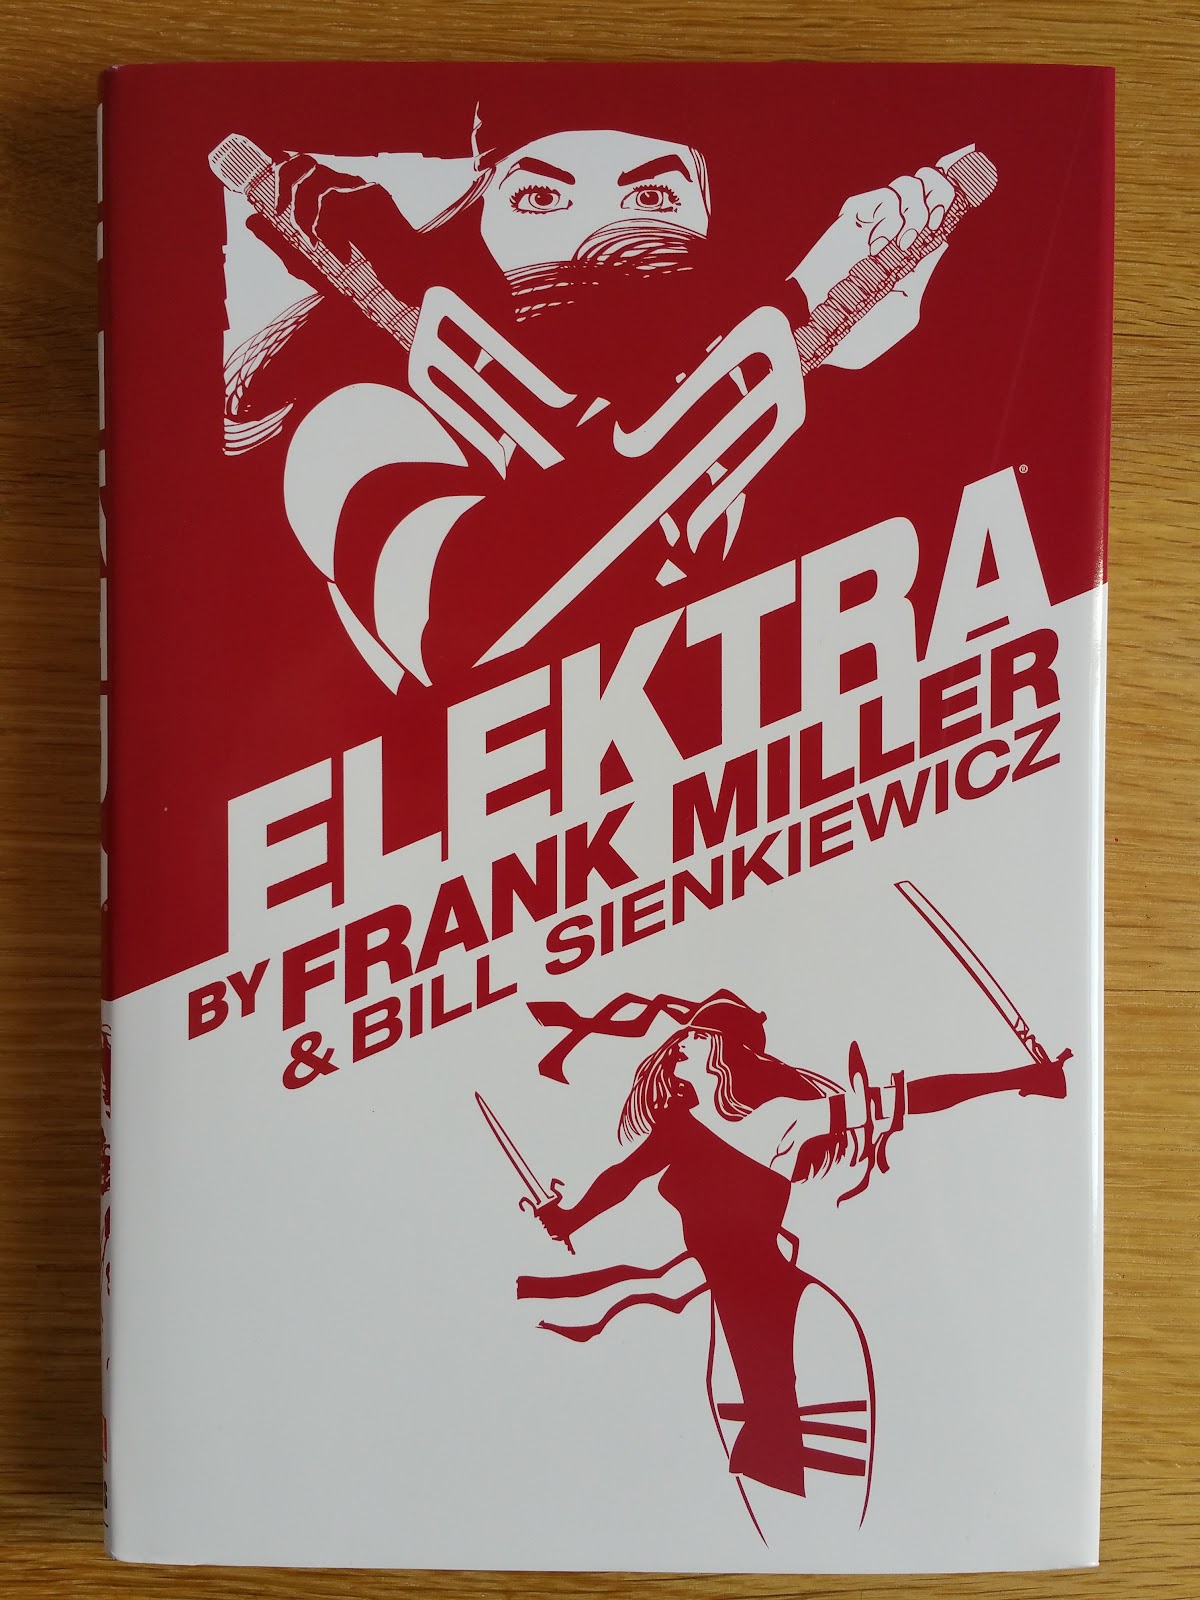 Elektra Vive (Em Portugues do Brasil): Frank Miller: 9788583682530:  : Books